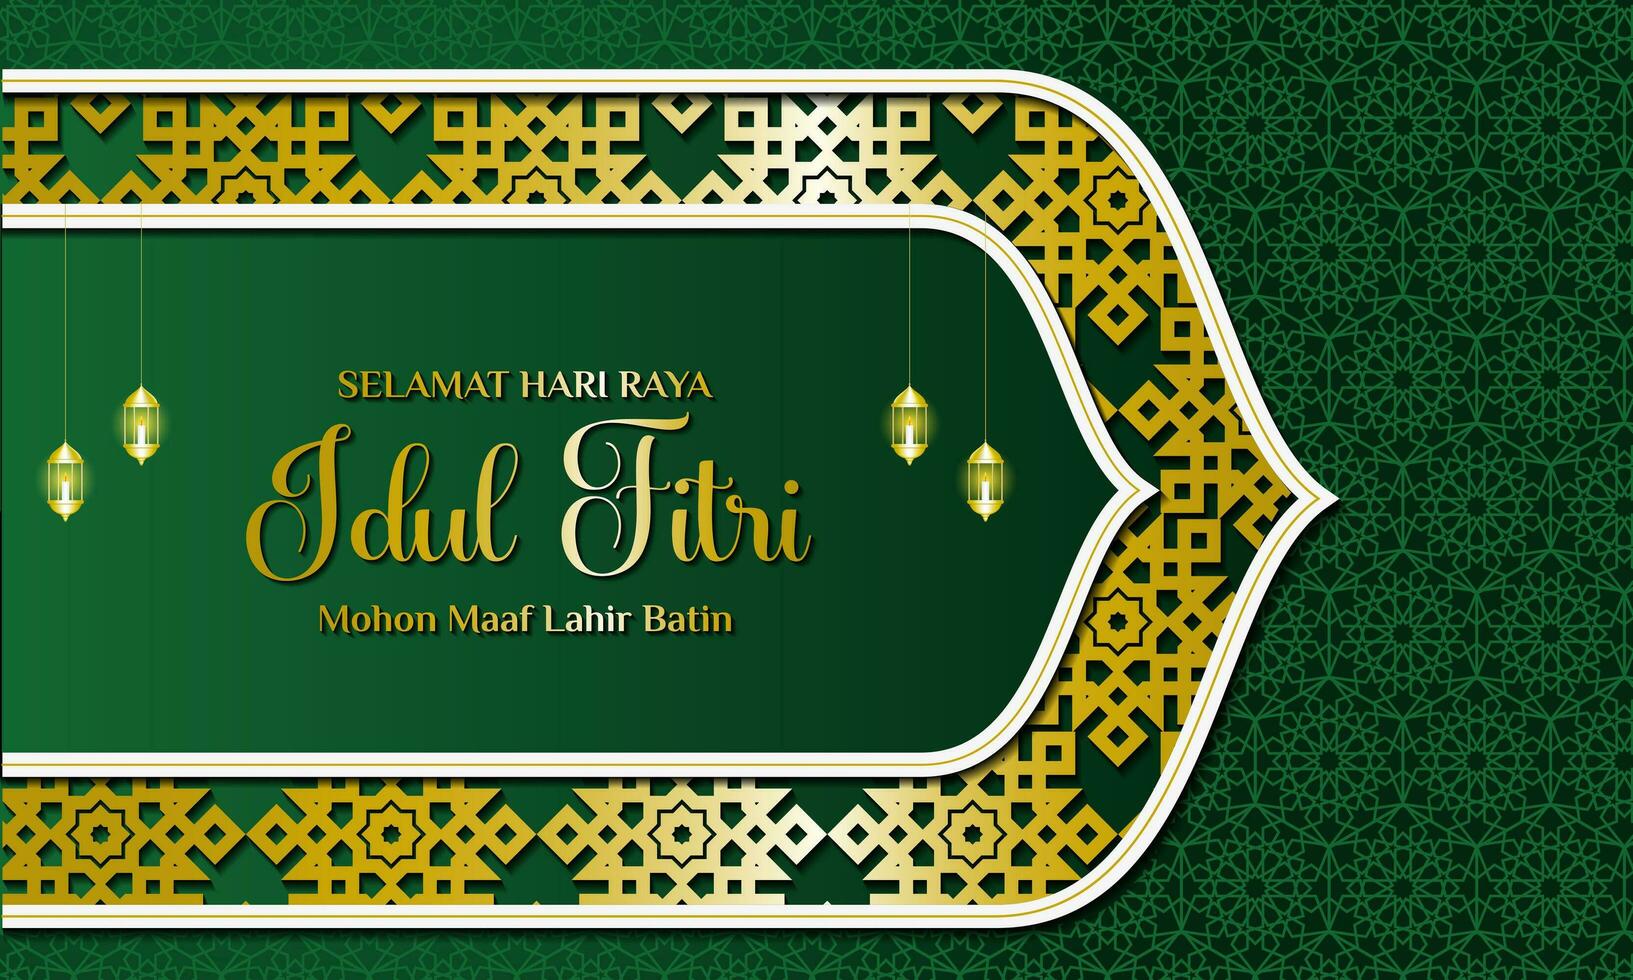 Eid mubarak background design vector illustration